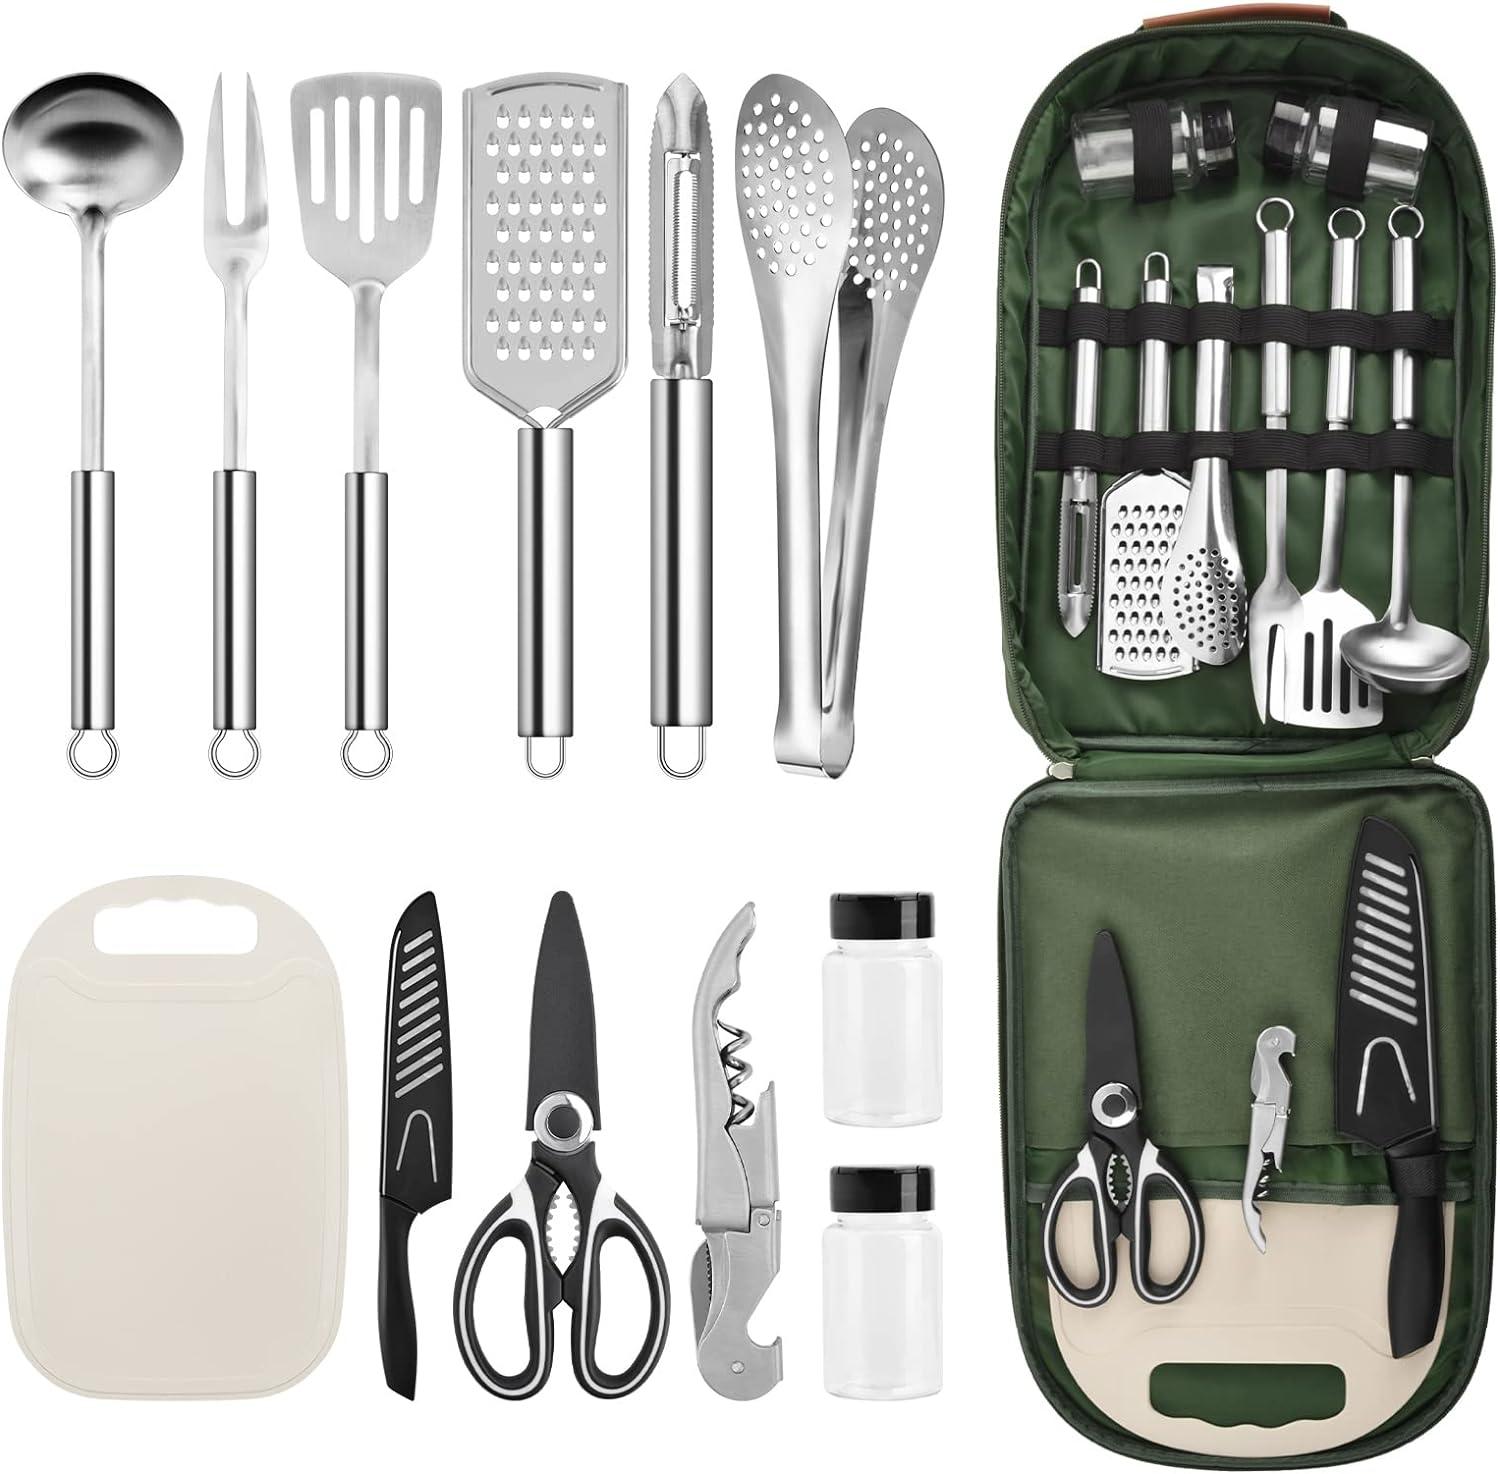 Camping Eating Utensils Set – My Kitchen Gadgets